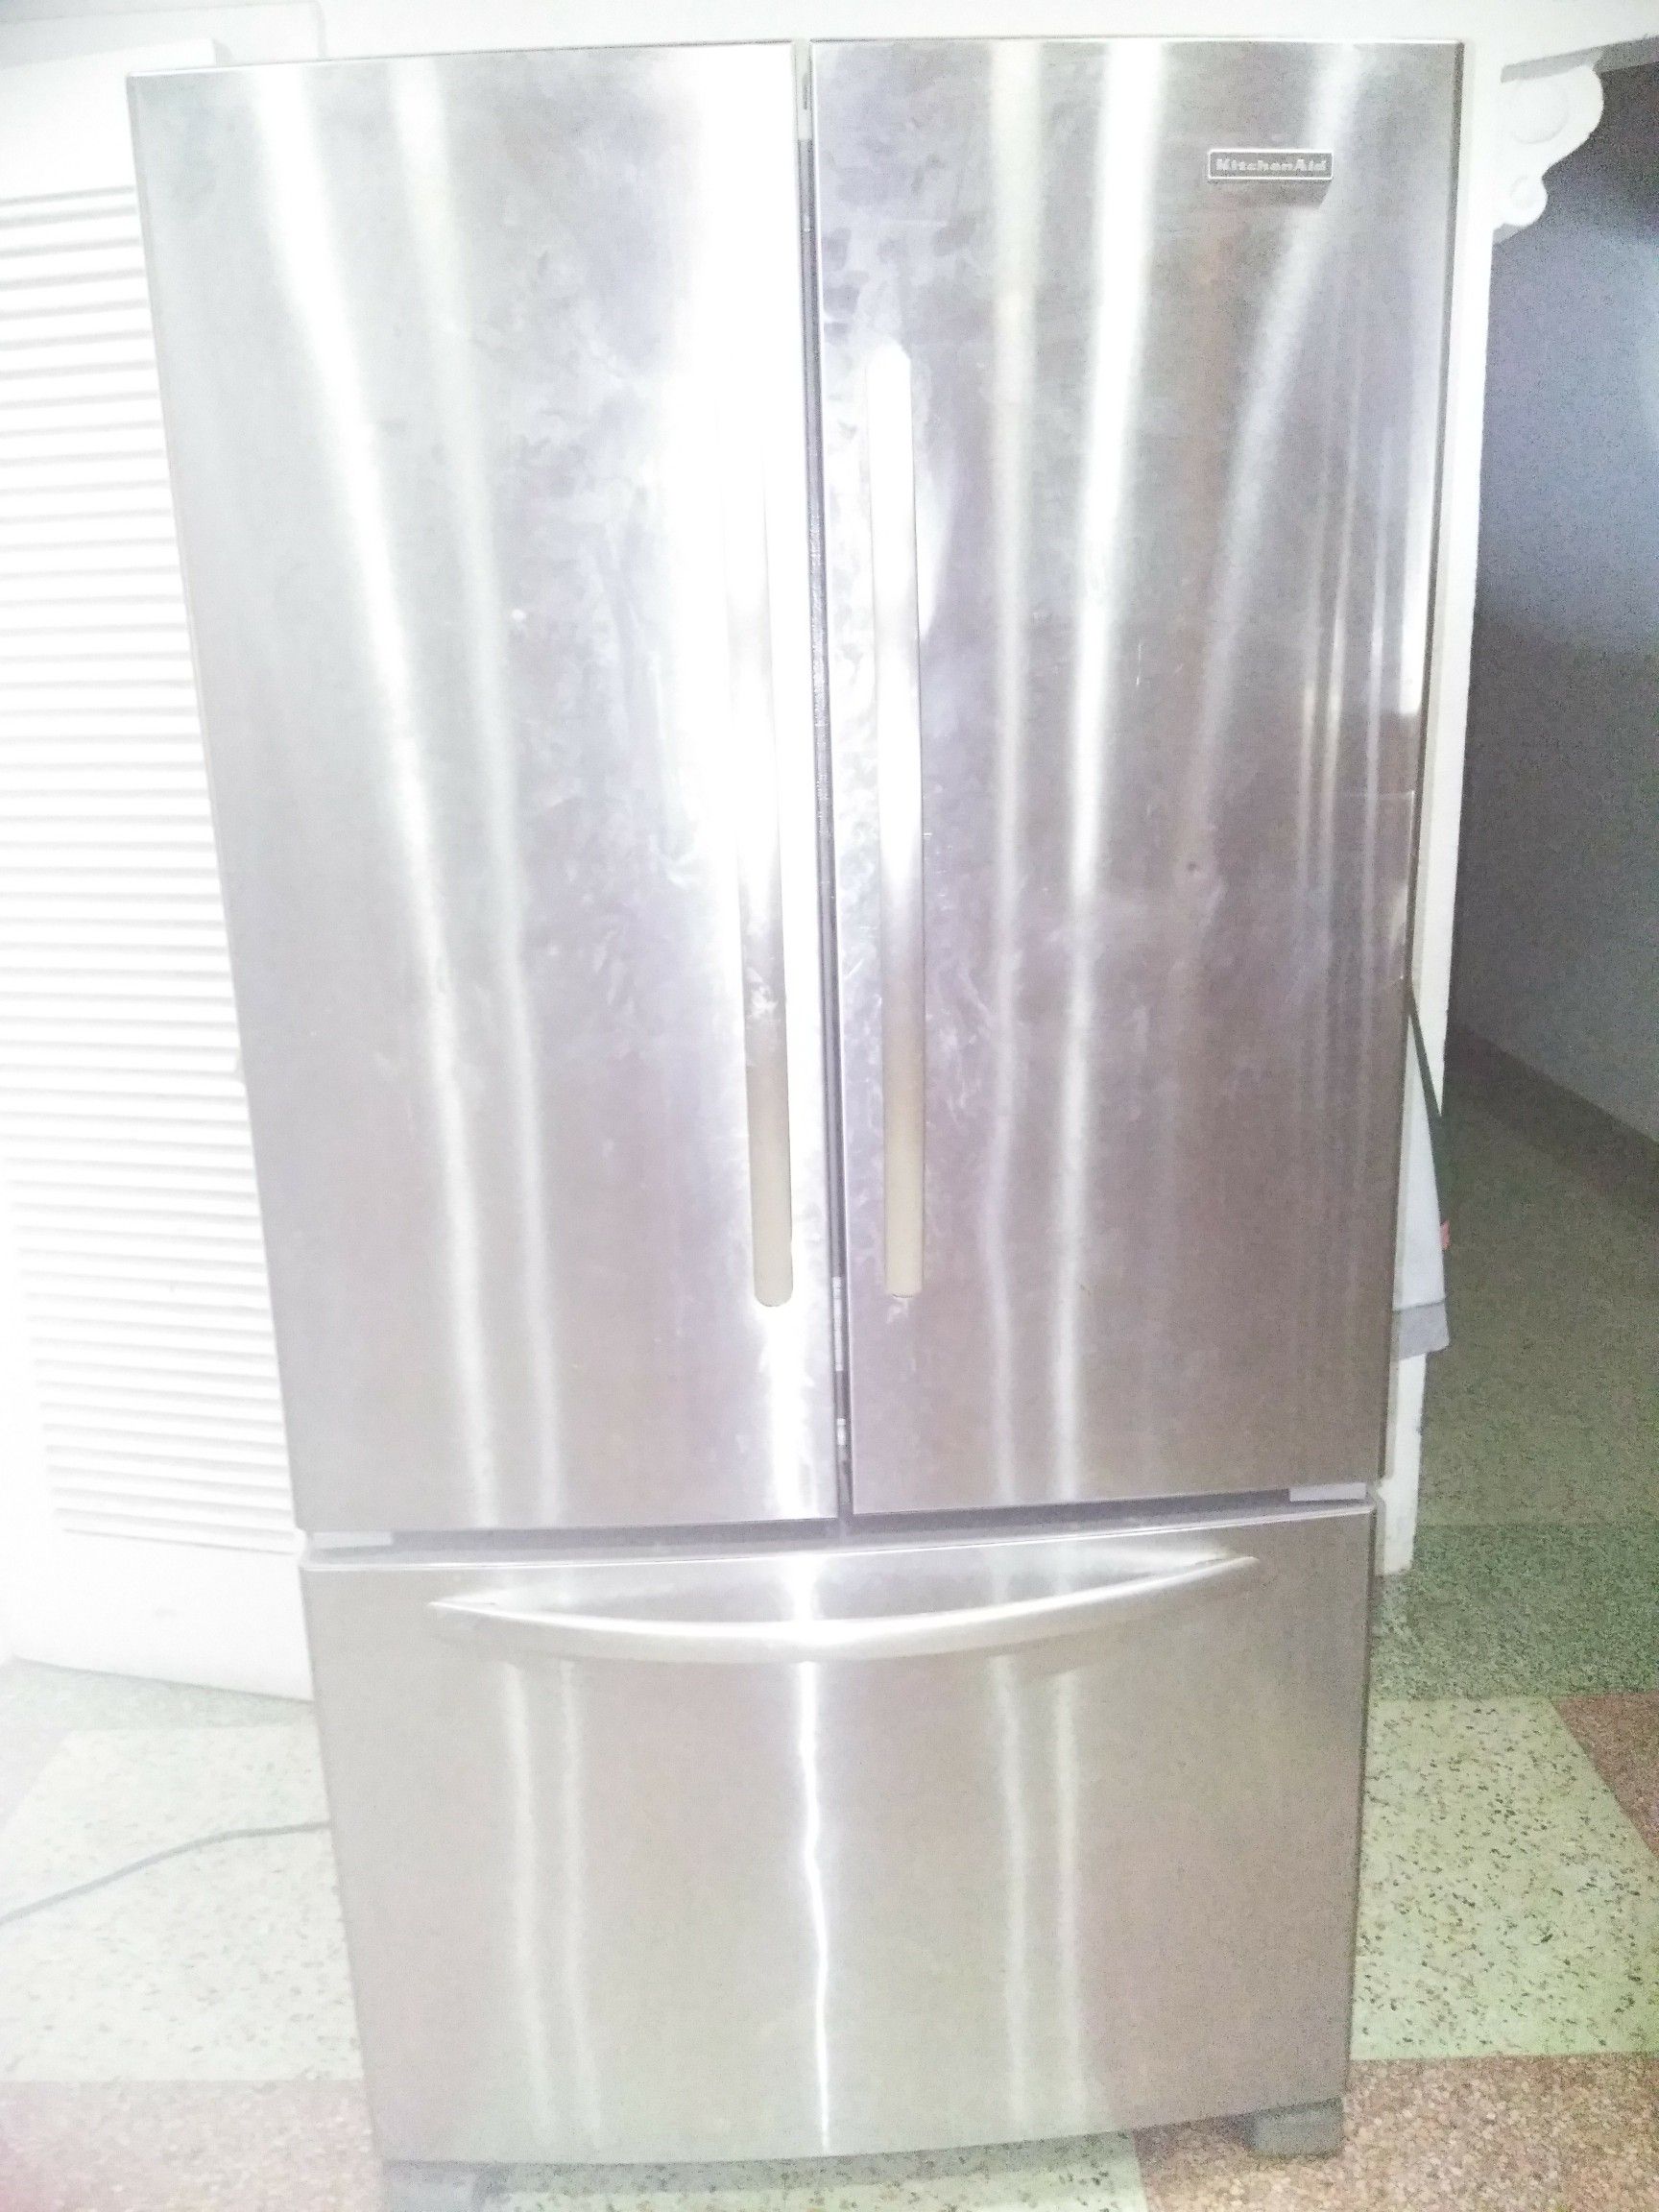 Refrigerator Whirlpool 36 inch good condition